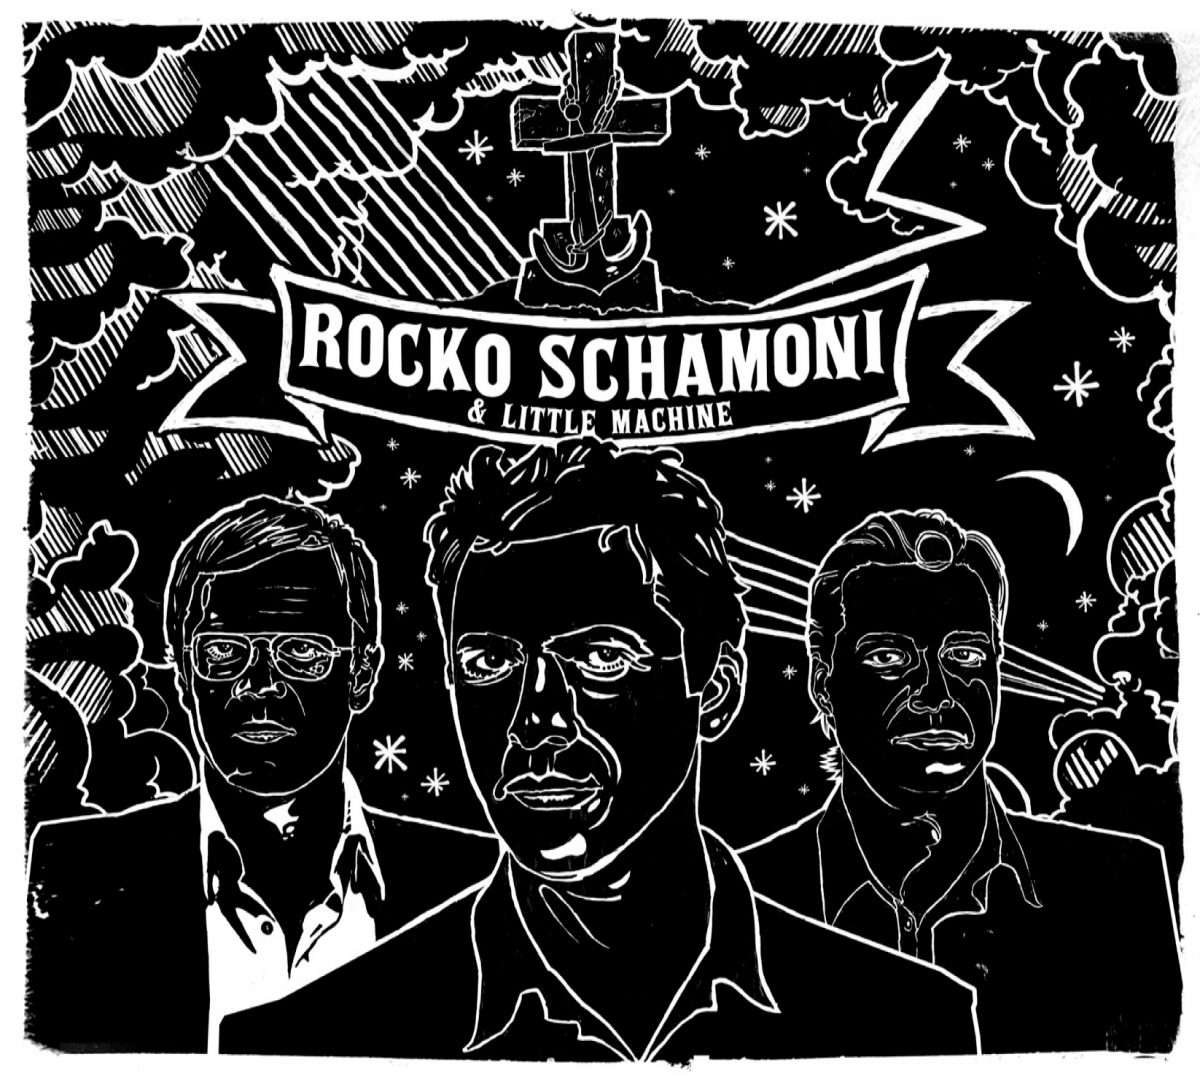 Rocko Schamoni - Rocko Schamoni & Little Machine 1